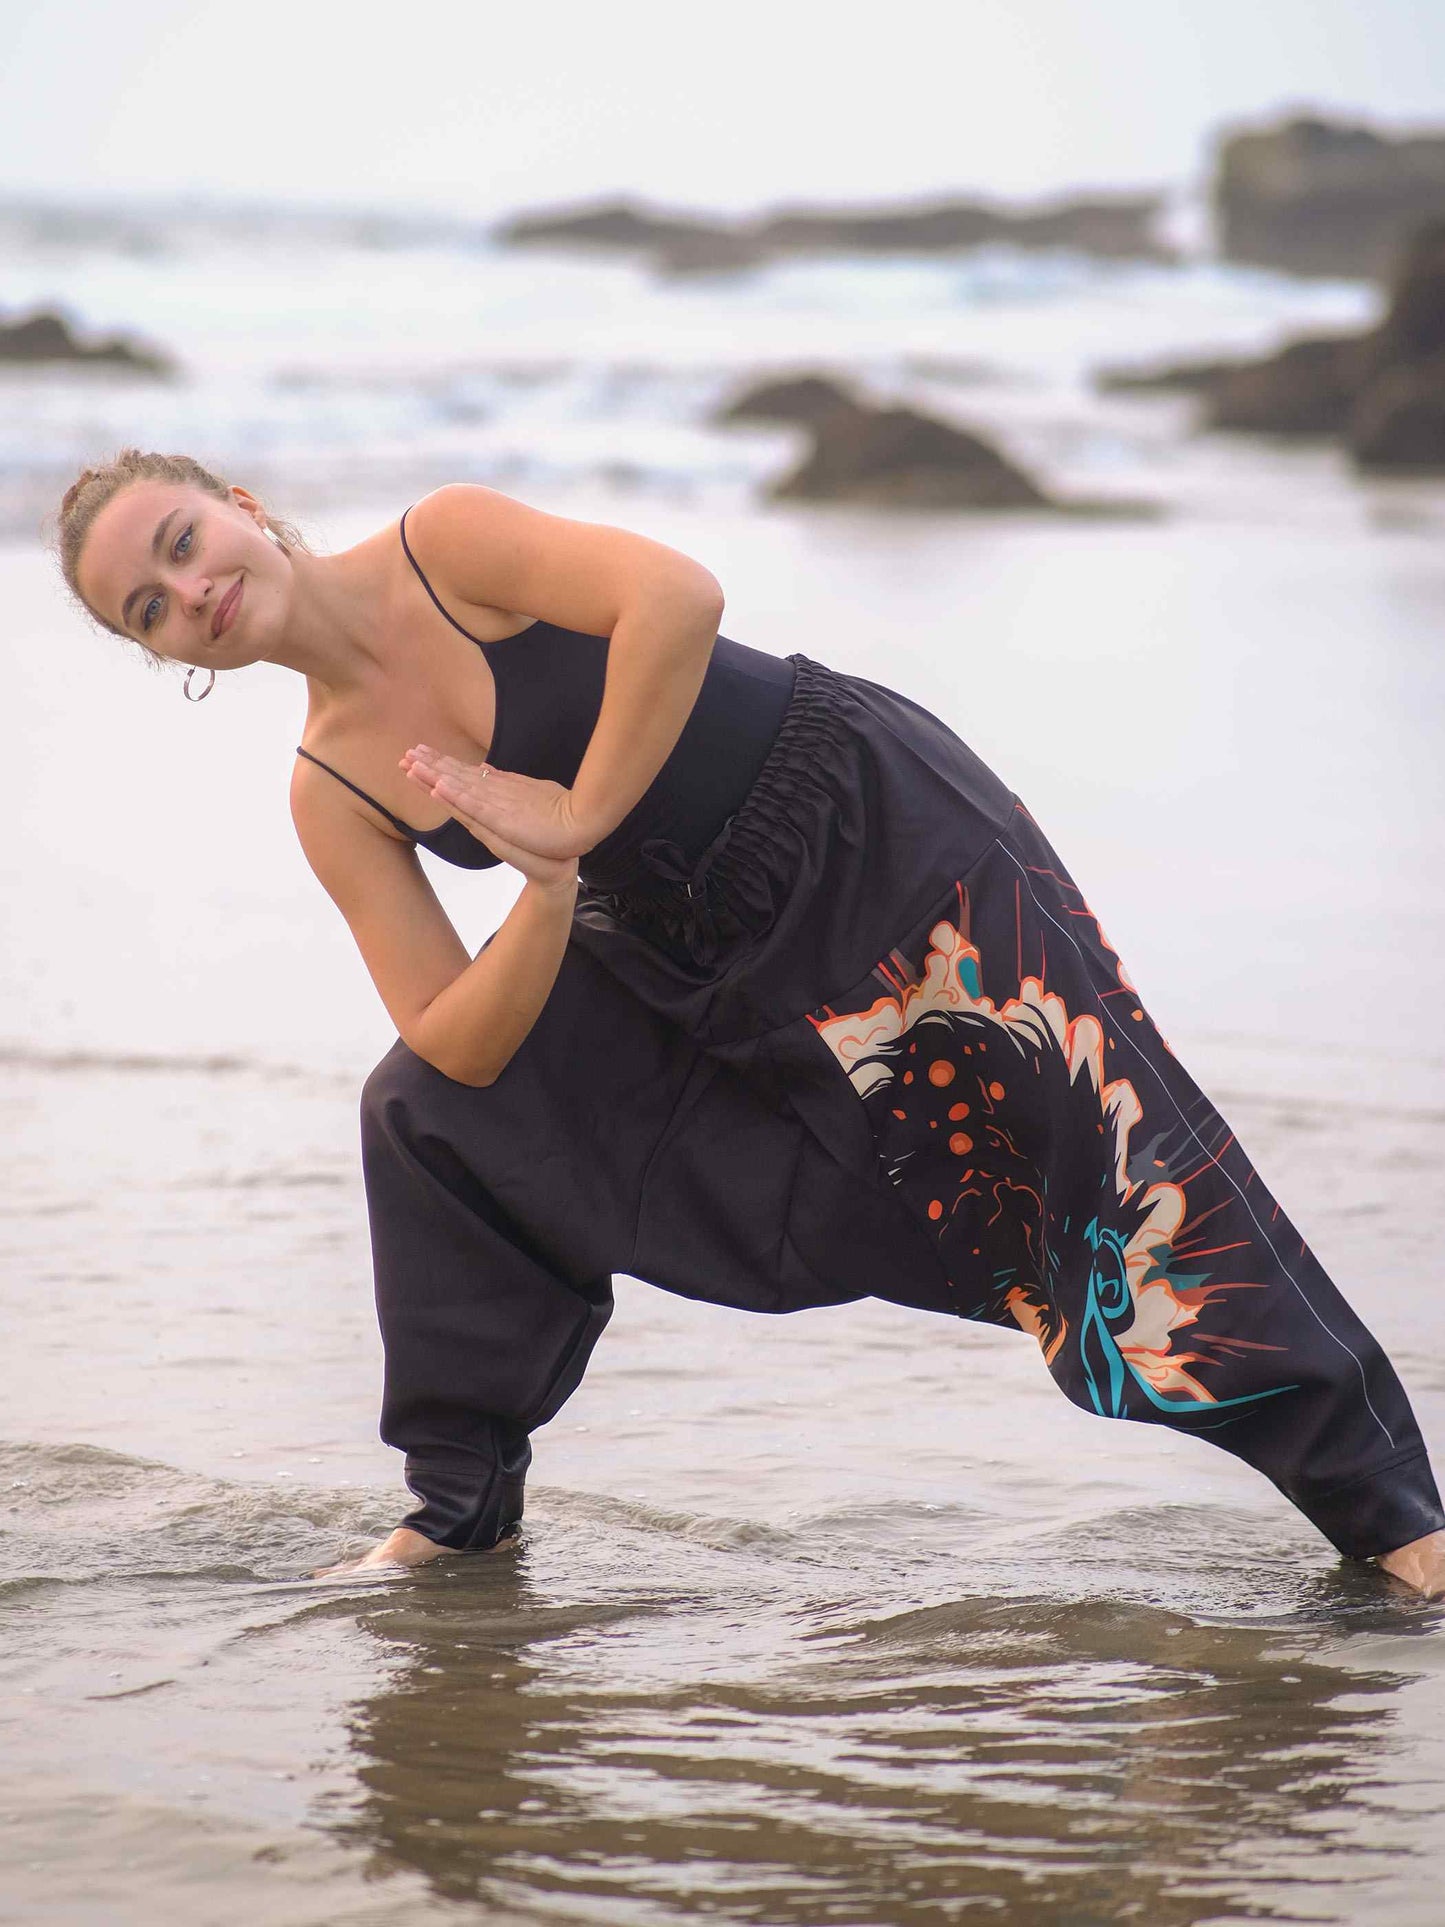 Buy Women's Nomad Elegance Hippy Black Harem Pants Aladdin Balloon Pyjamas For Travel